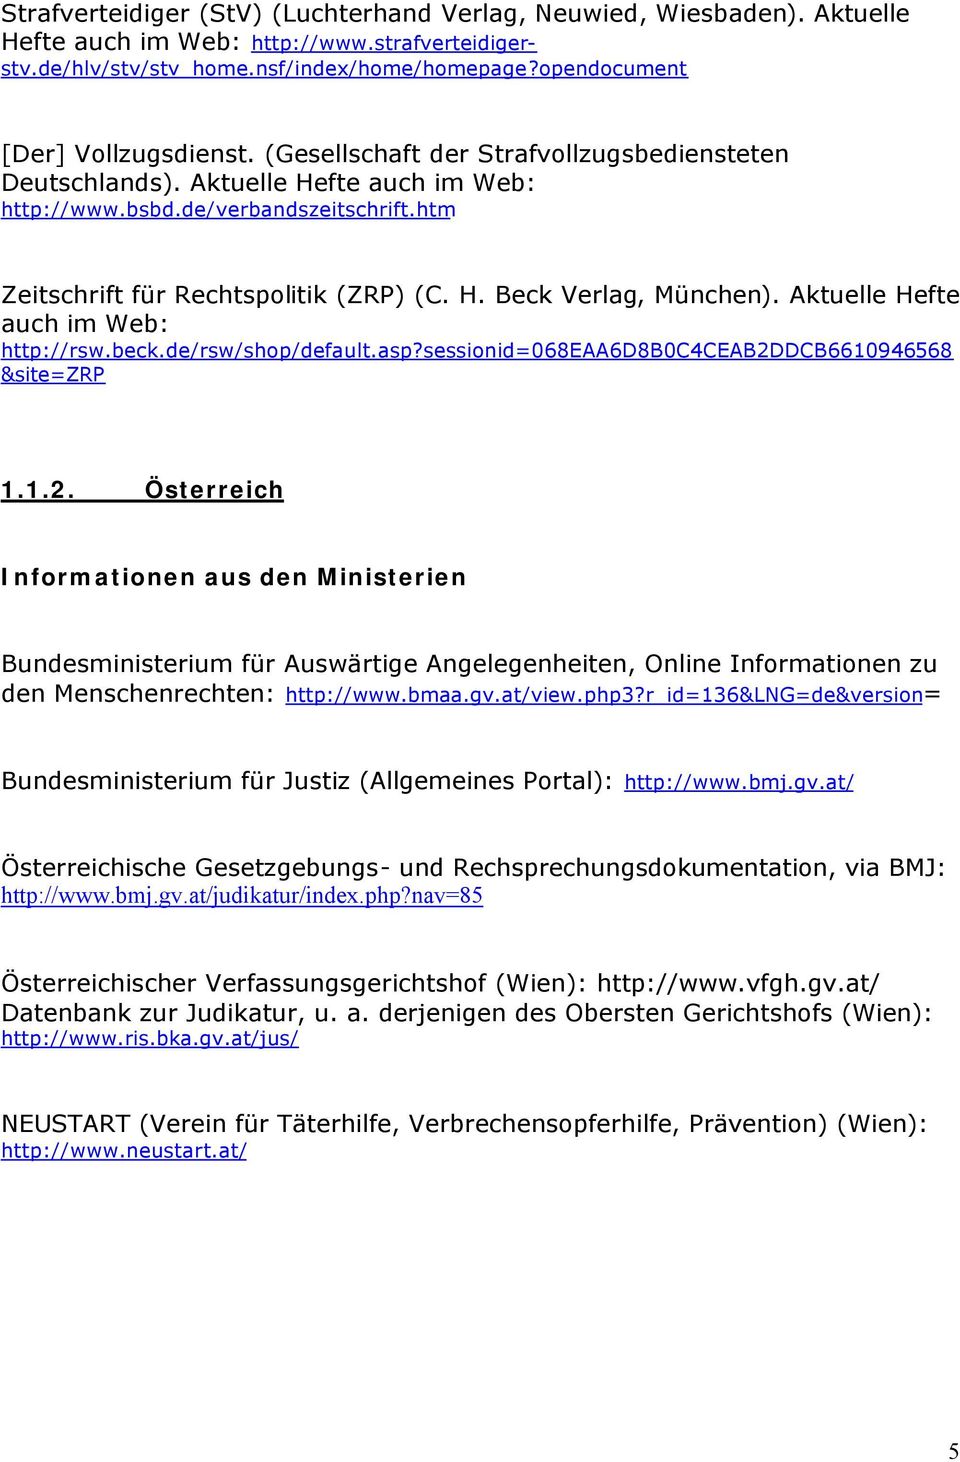 htm Zeitschrift für Rechtspolitik (ZRP) (C. H. Beck Verlag, München). Aktuelle Hefte auch im Web: http://rsw.beck.de/rsw/shop/default.asp?sessionid=068eaa6d8b0c4ceab2d